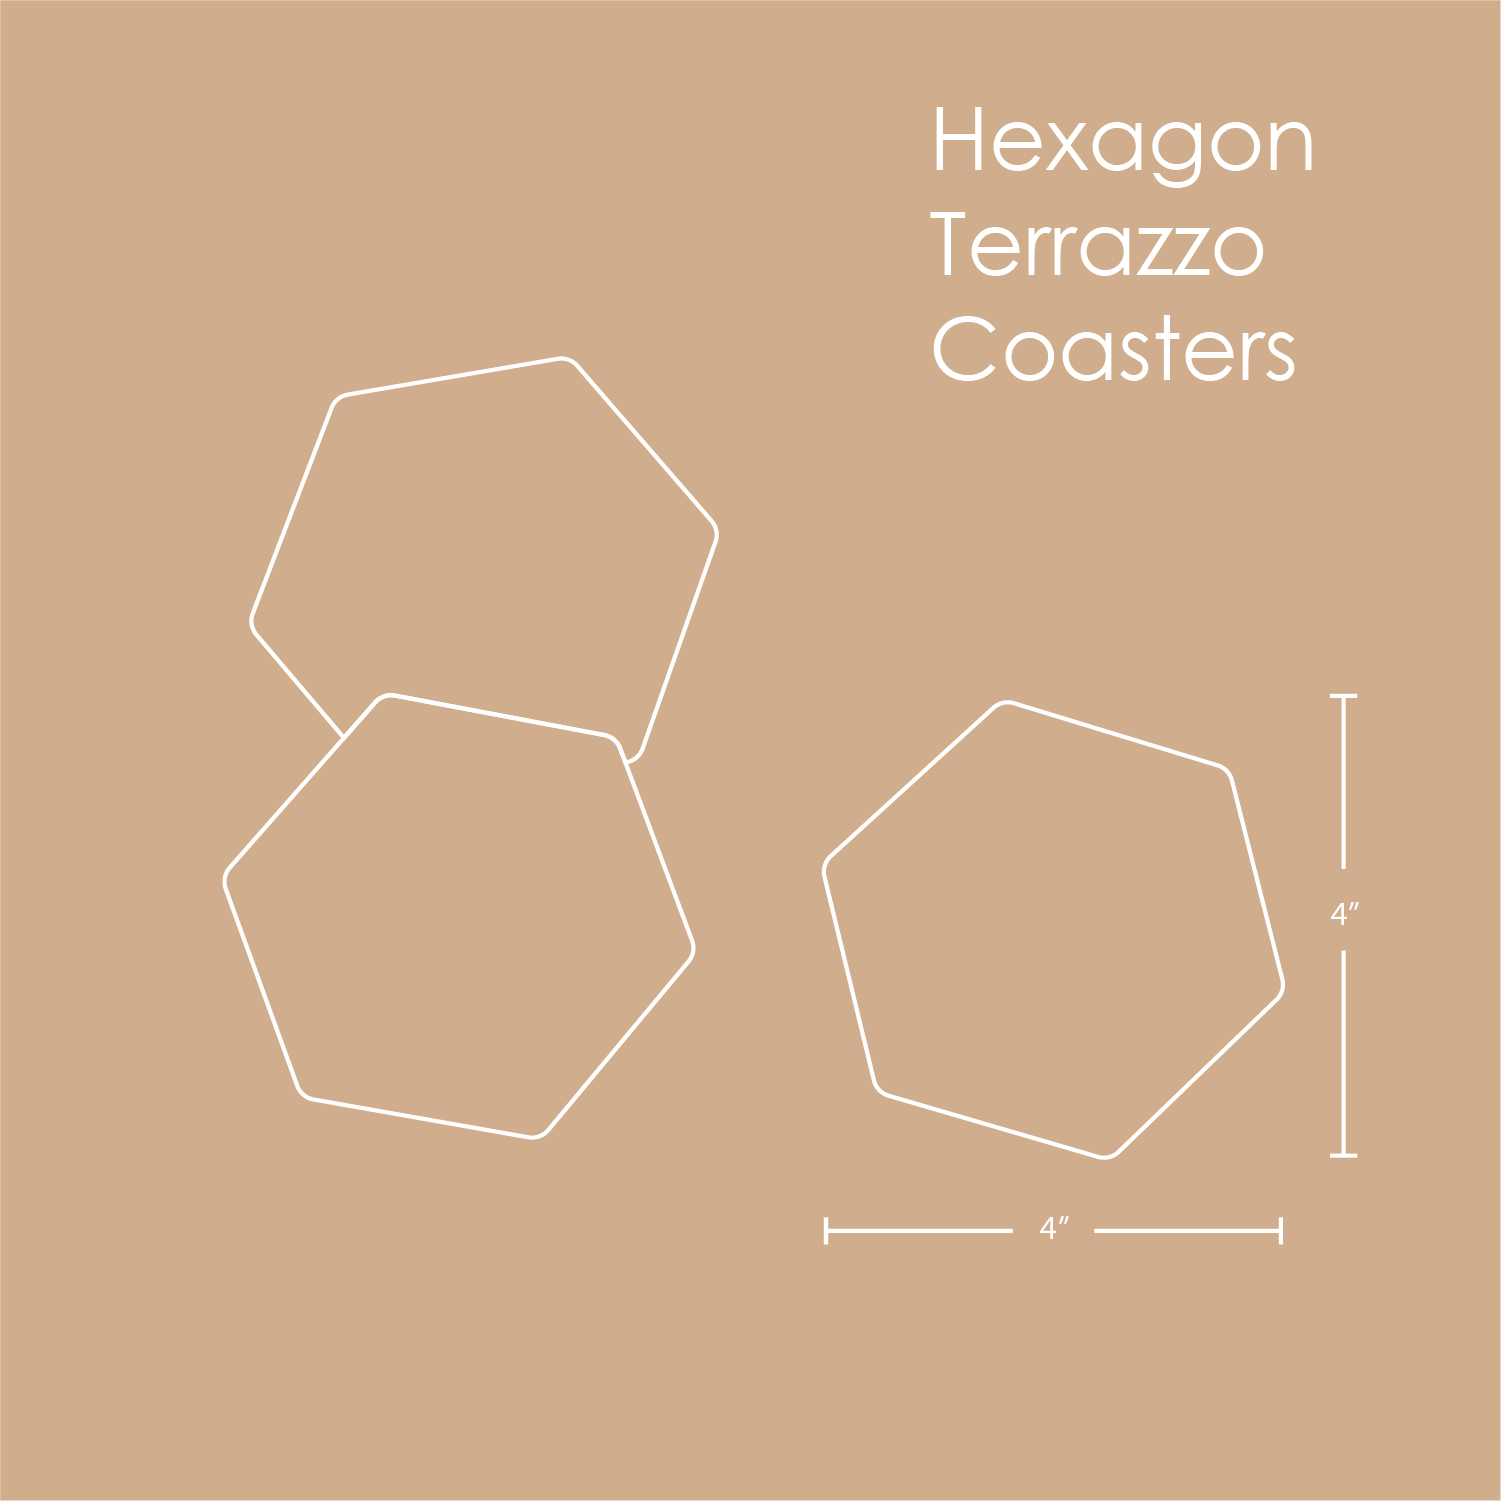 Hexagon Terrazzo Coasters